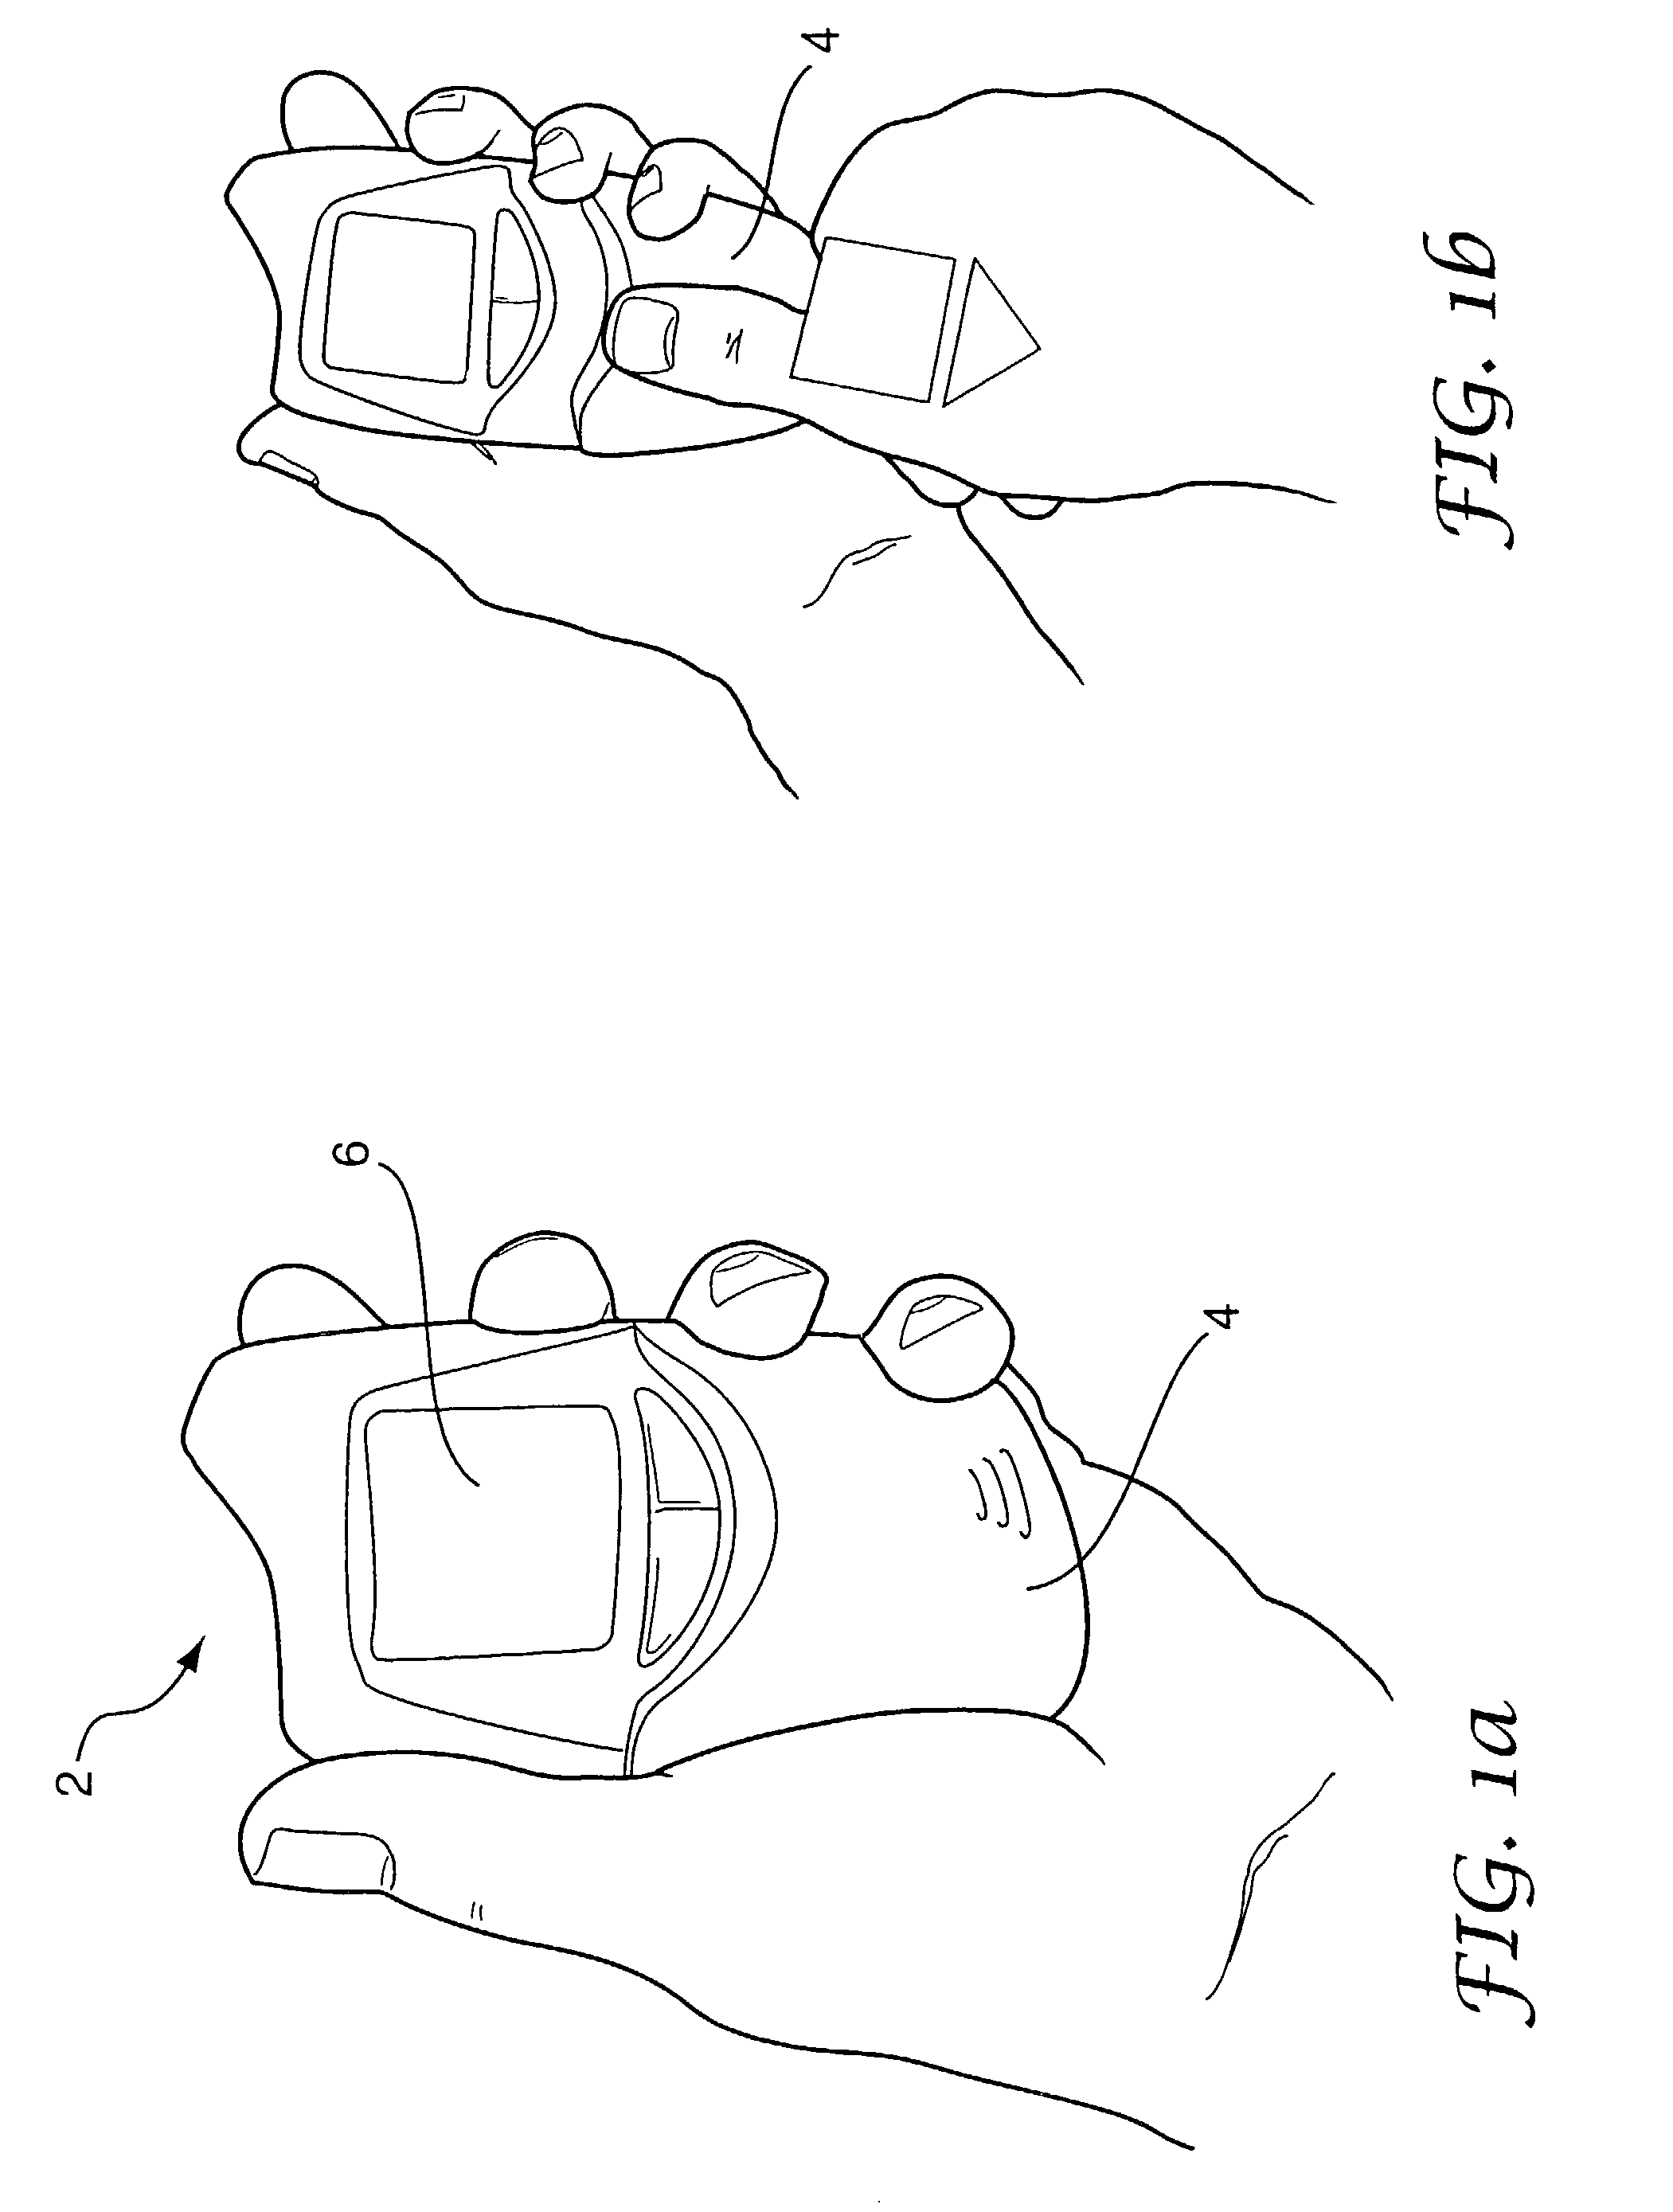 Sensor dispensing device